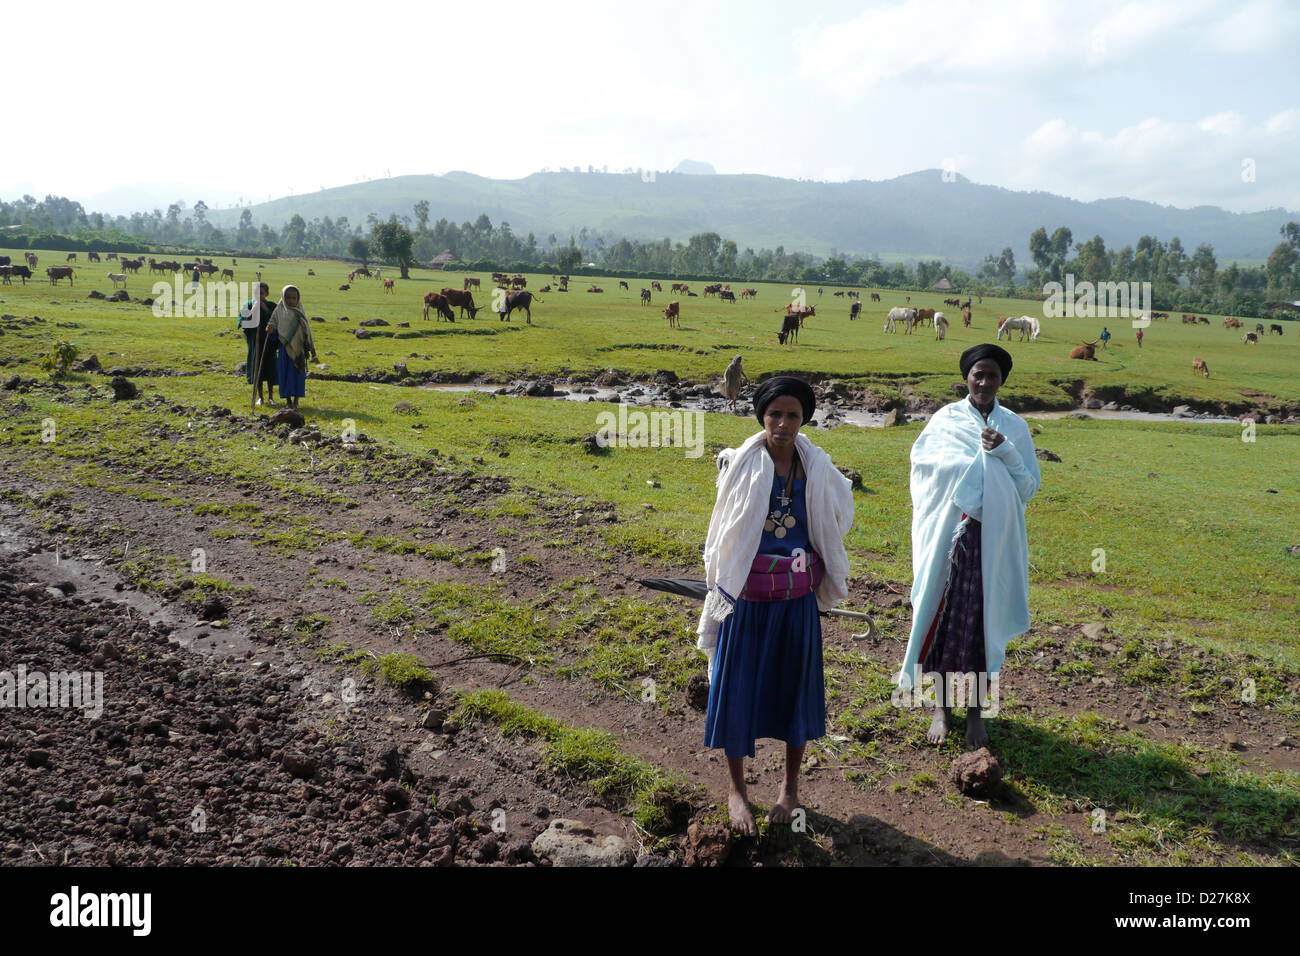 On the road between Chagni and Injibara, Beni Shangul Gumuz region. Cattle grazing on lush pastures. Stock Photo